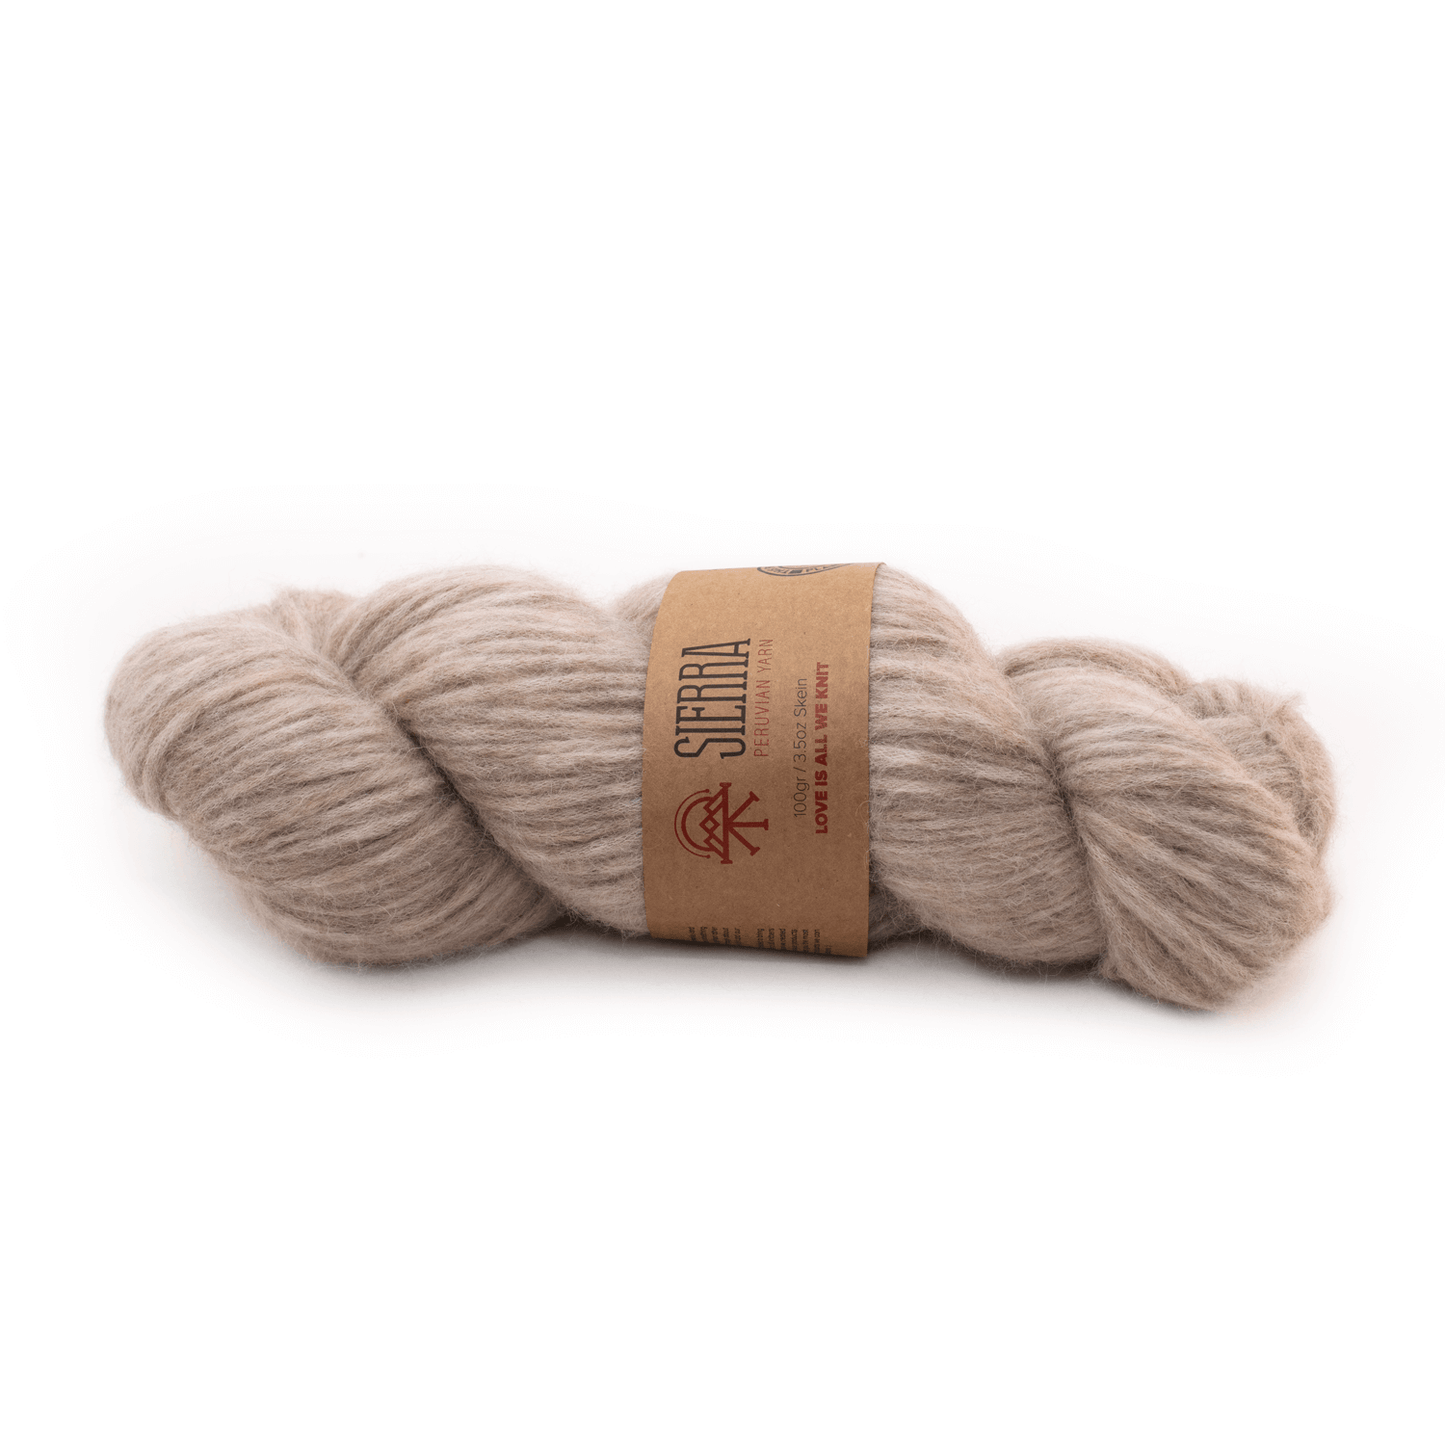 Alpaca Beige Light pullover Knitting Kit